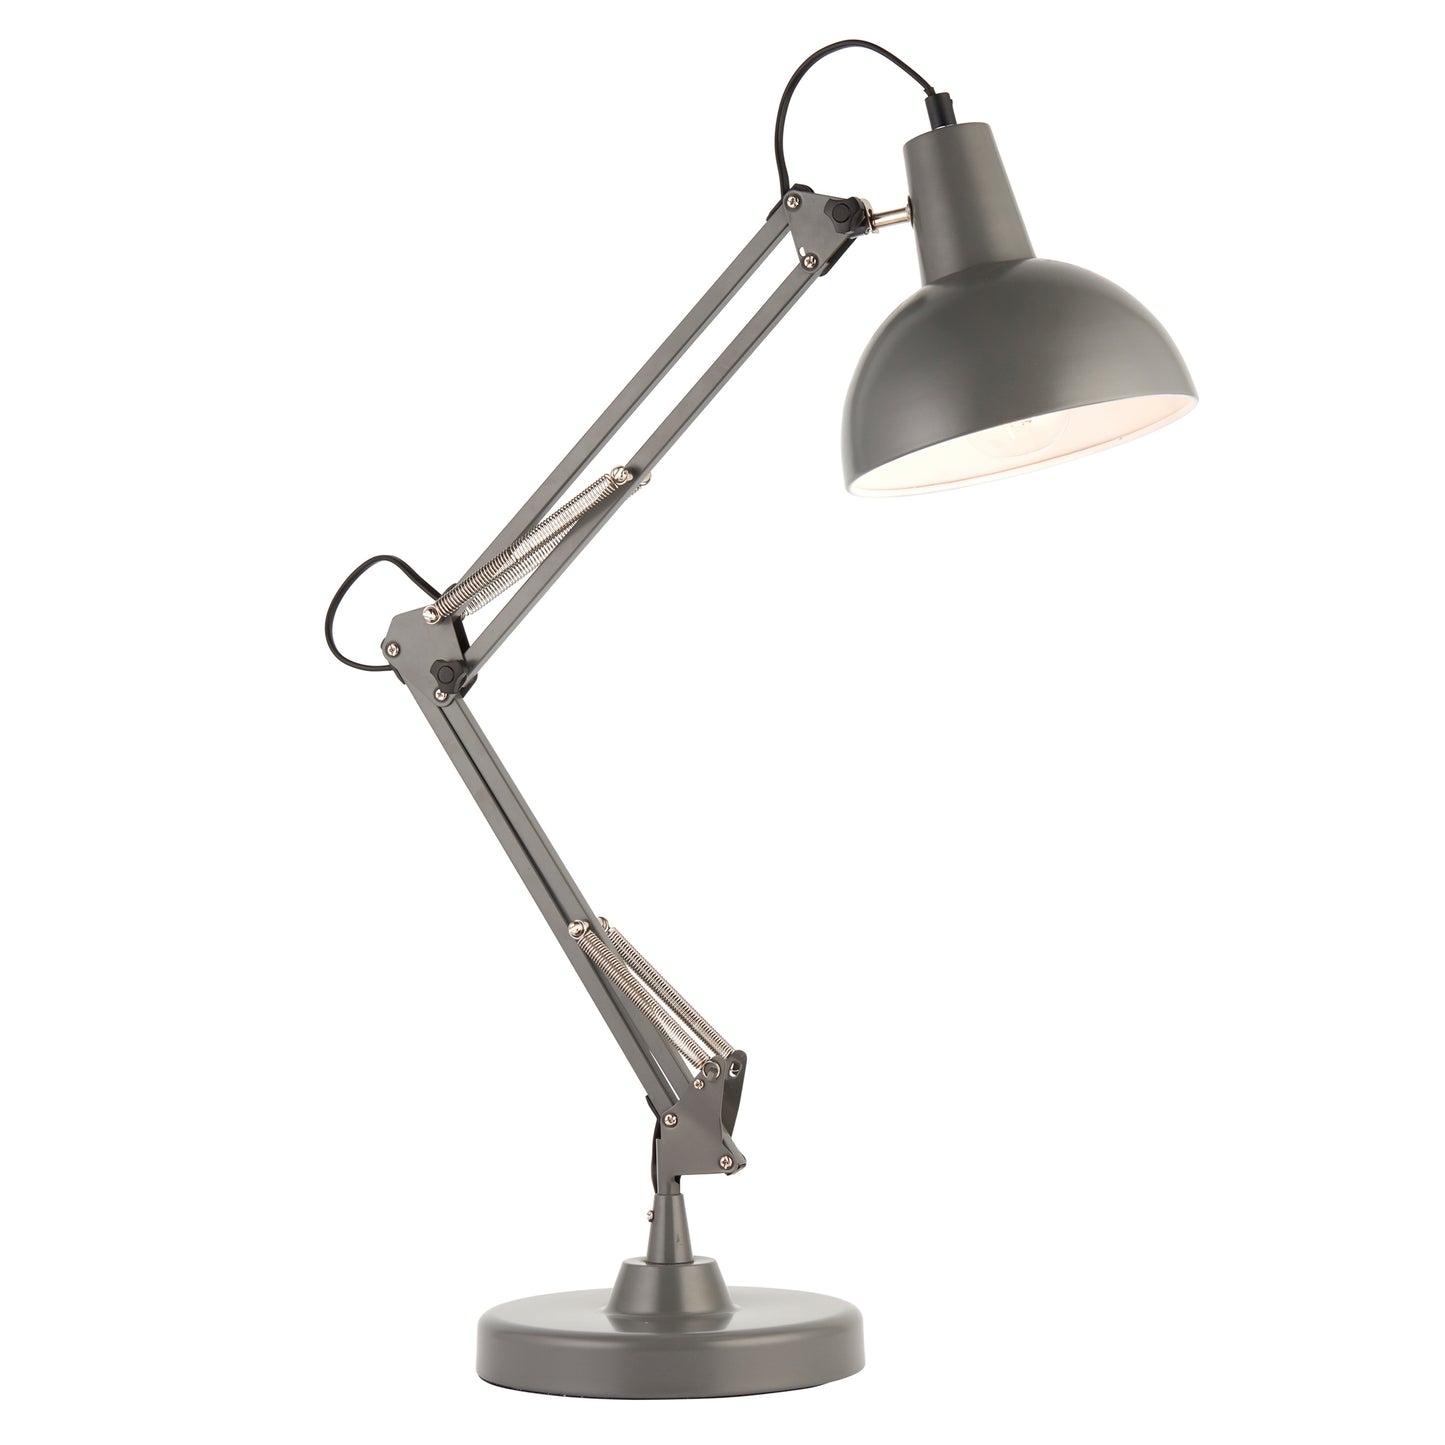 A Marshall 1 Table Light Slate Grey & White desk lamp from Kikiathome.co.uk.